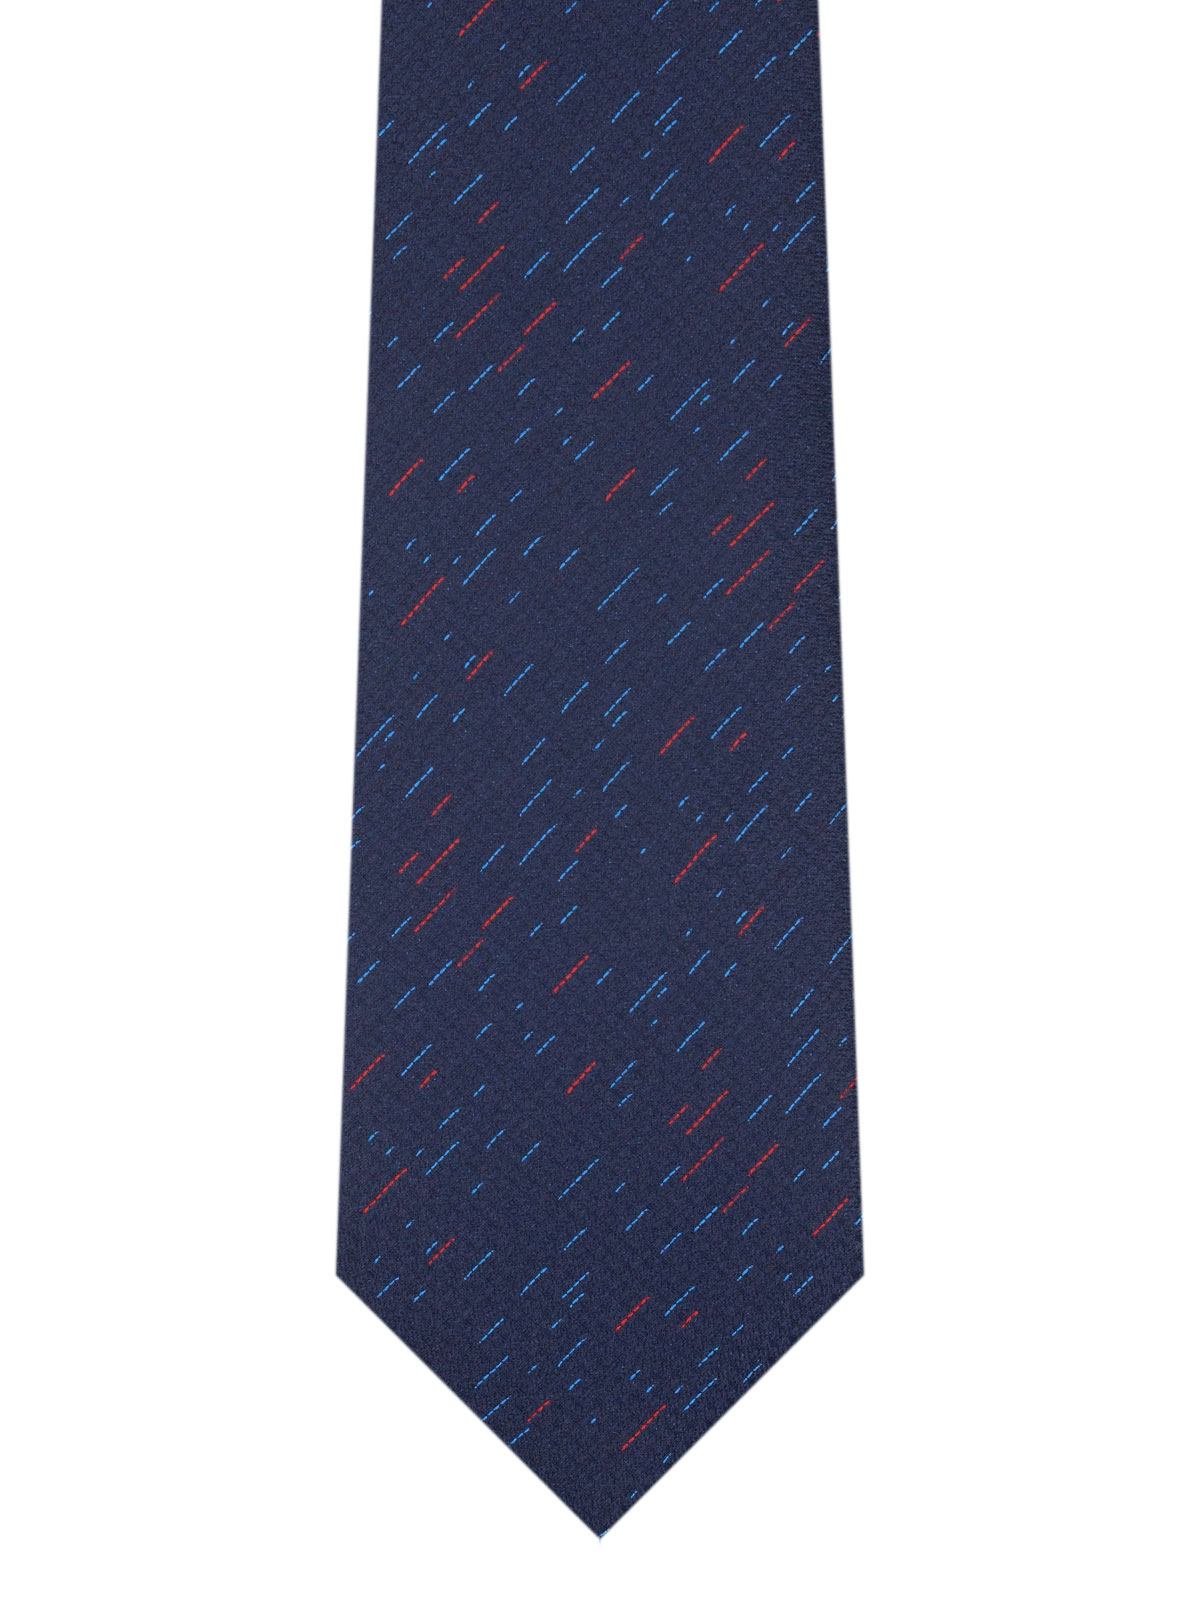 Structured blue tie - 10174 - € 14.06 img2